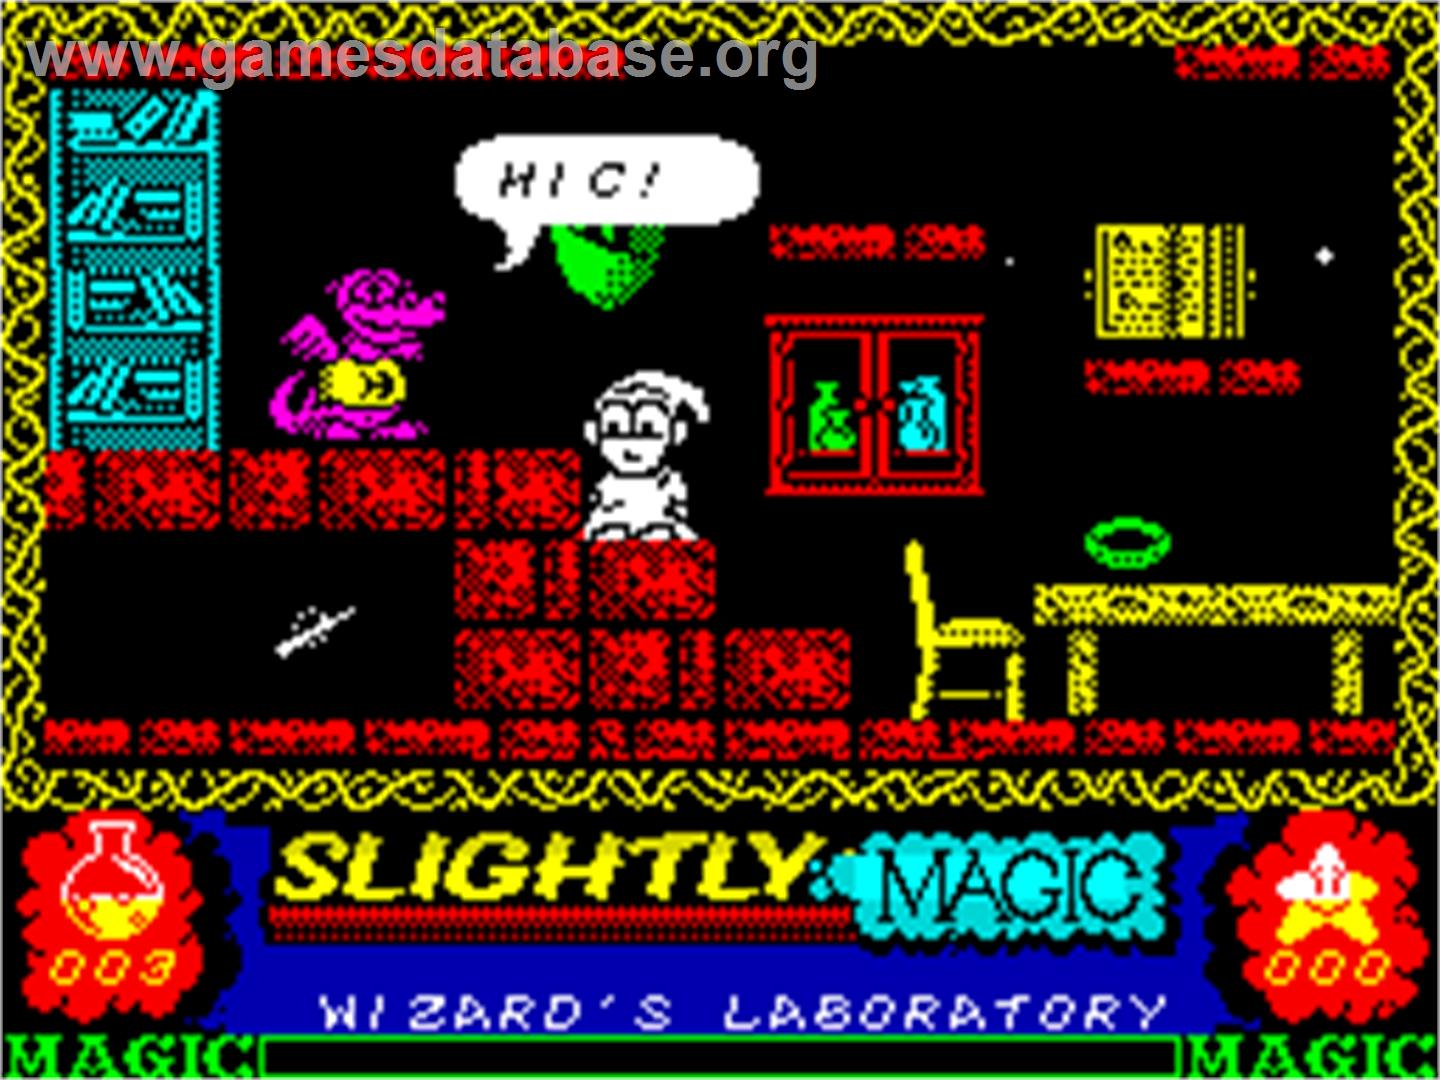 Slightly Magic - Sinclair ZX Spectrum - Artwork - In Game